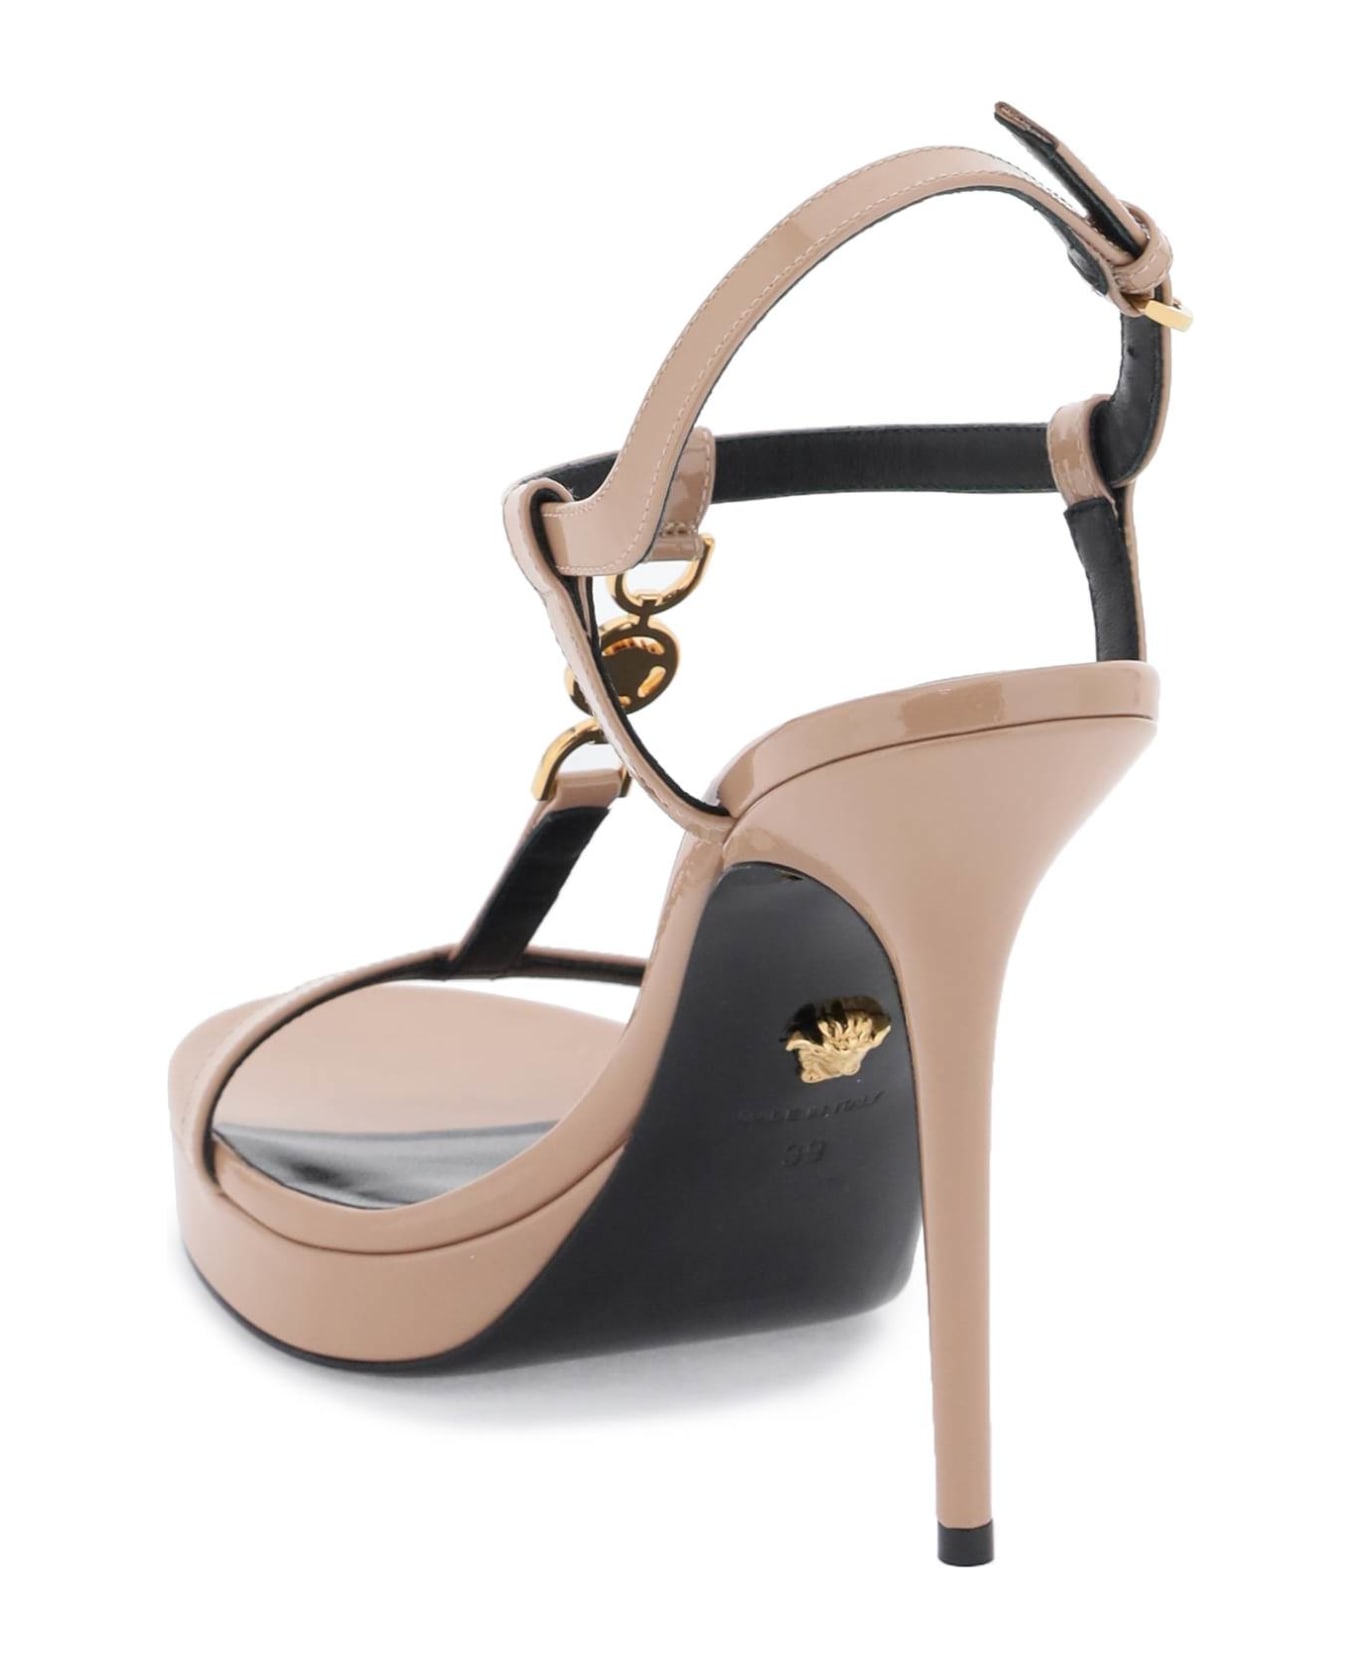 Versace Medusa '95 Patent Leather Sandals - BLUSH VERSACE GOLD サンダル